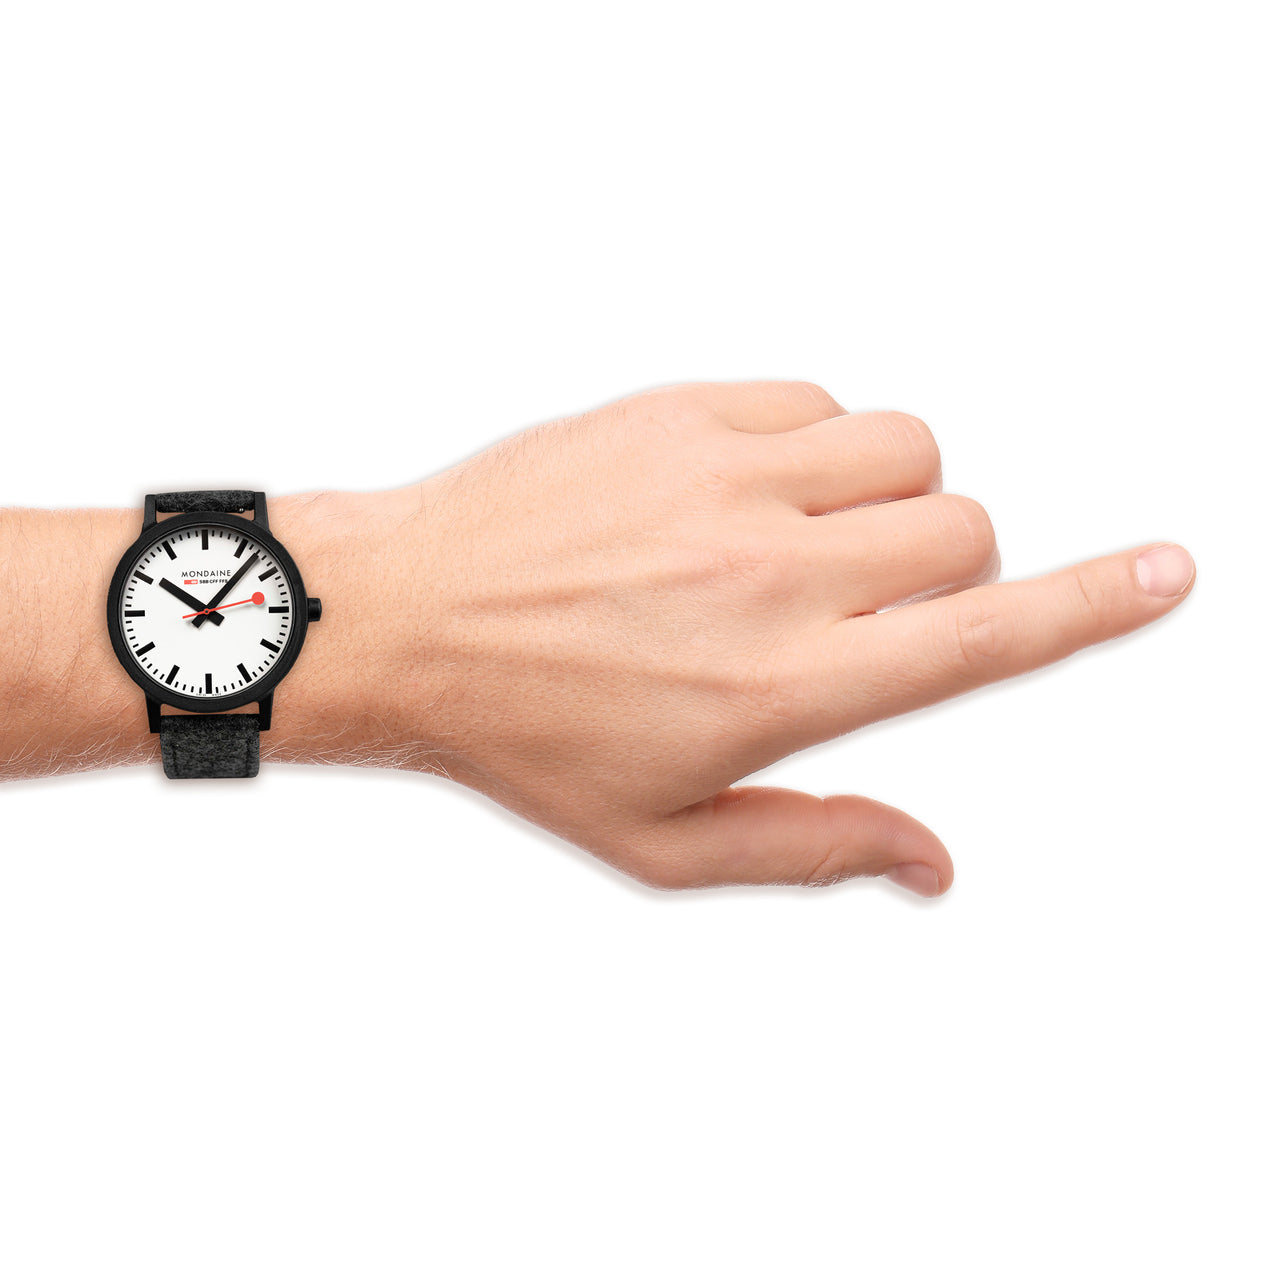 Mondaine Watch Essence Black Grey MS1.41110.LH.SET